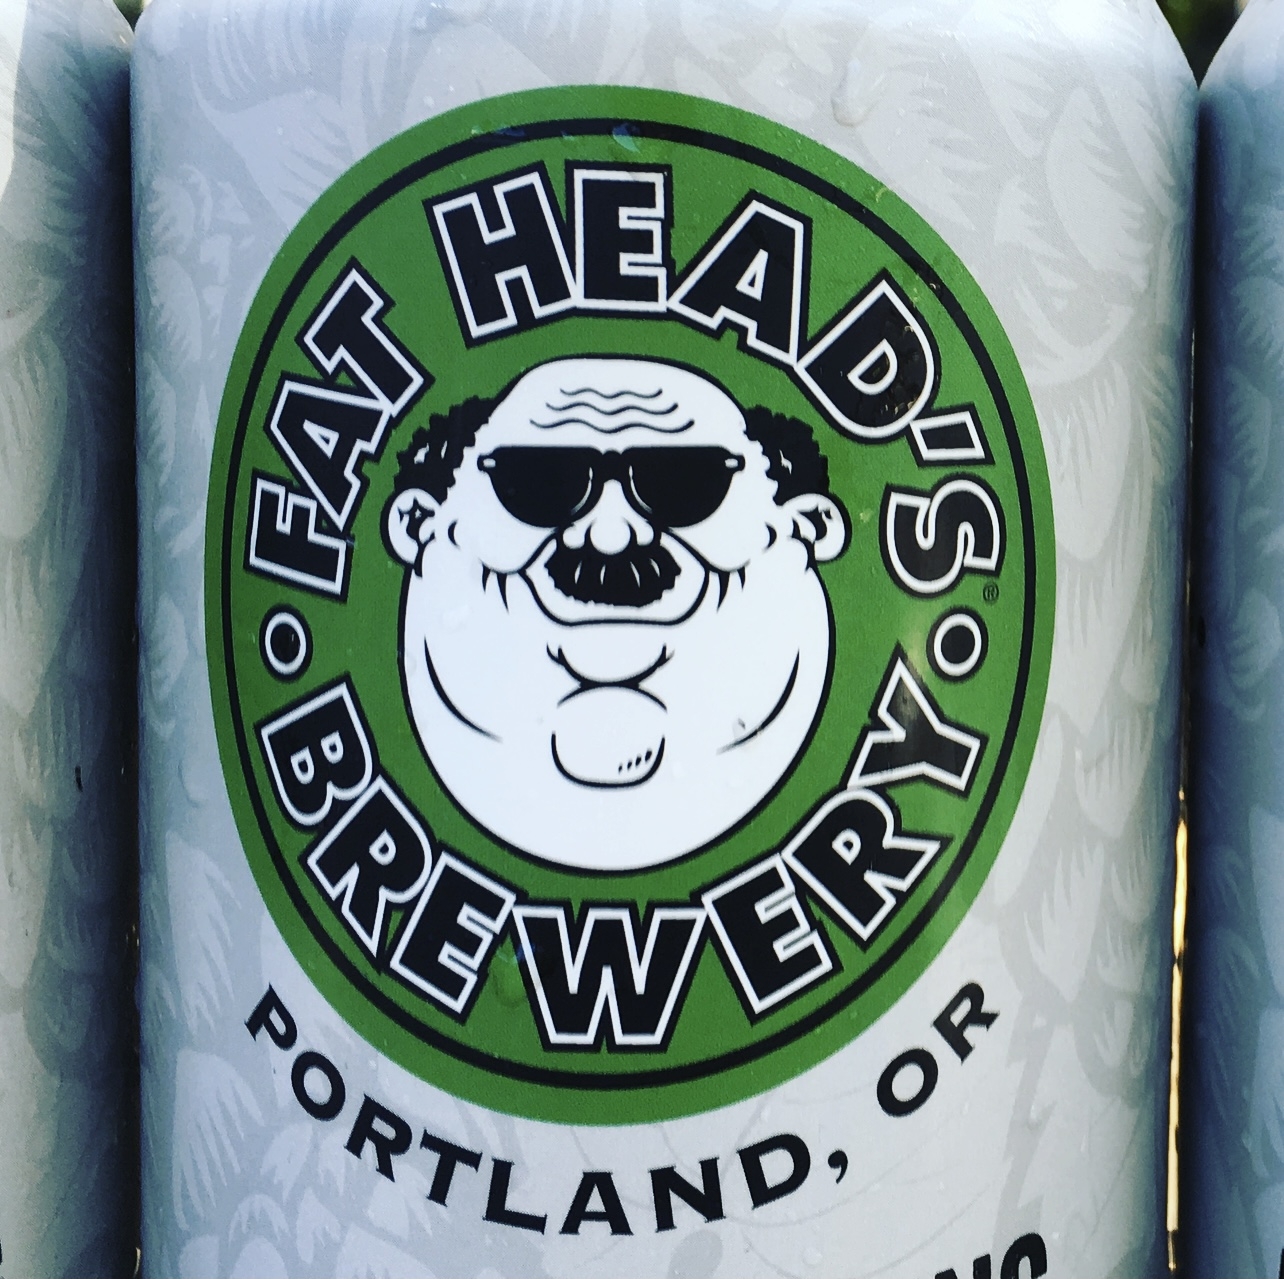 Michael Hunsaker Head Brewer Fat Head’s Portland - Portland Beer Podcast Episode 14 by Steven Shomler 